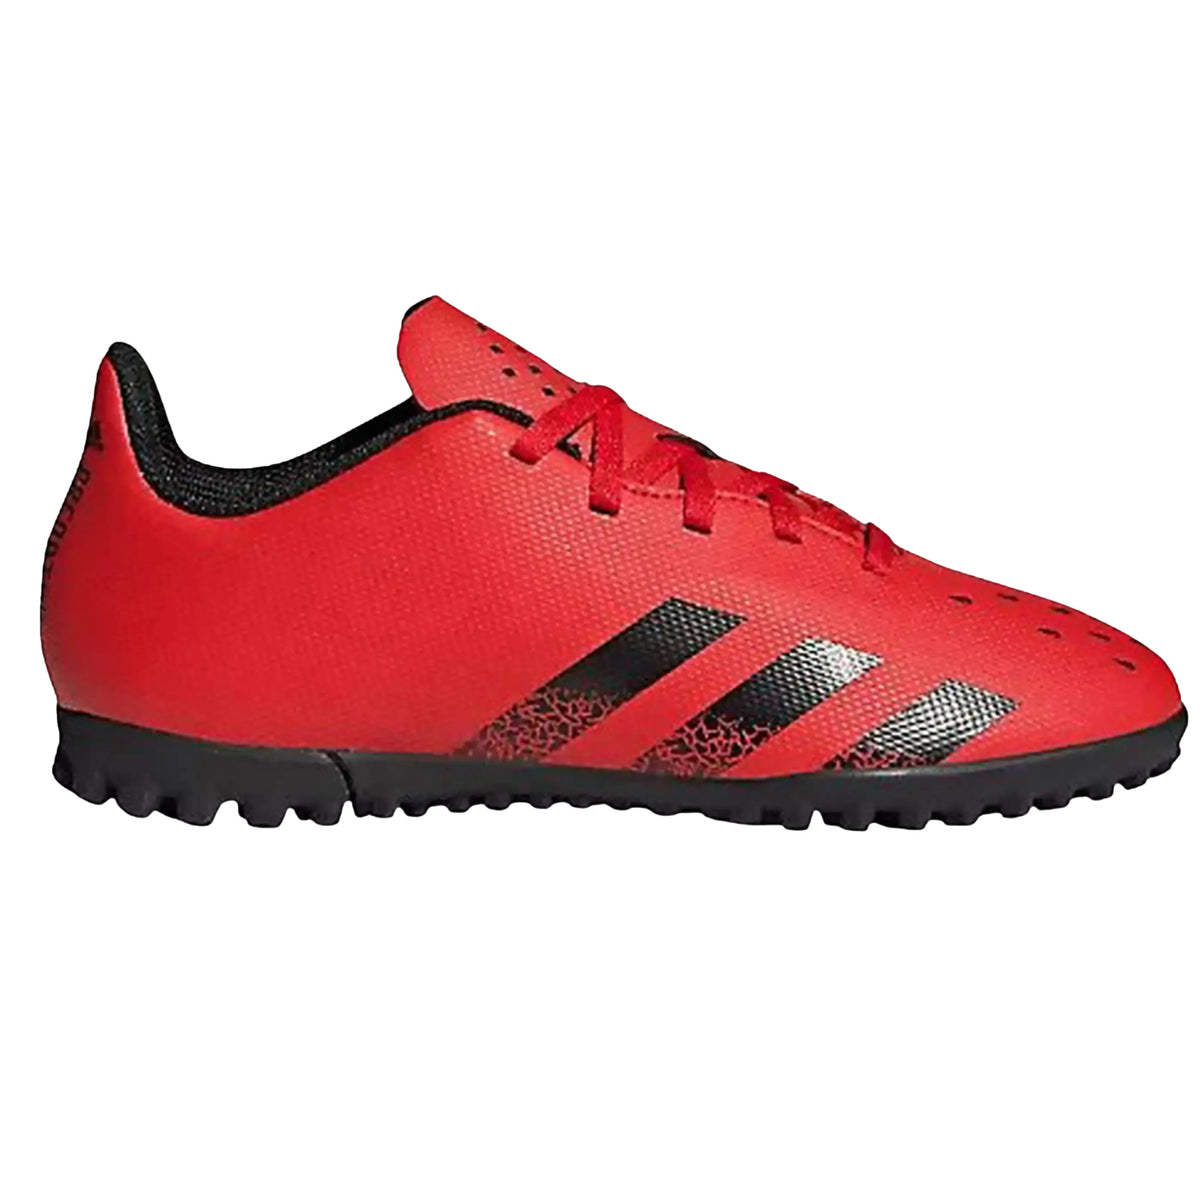 Adidas Predator Freak .4 Kids Turf Football Boots: Red/Black